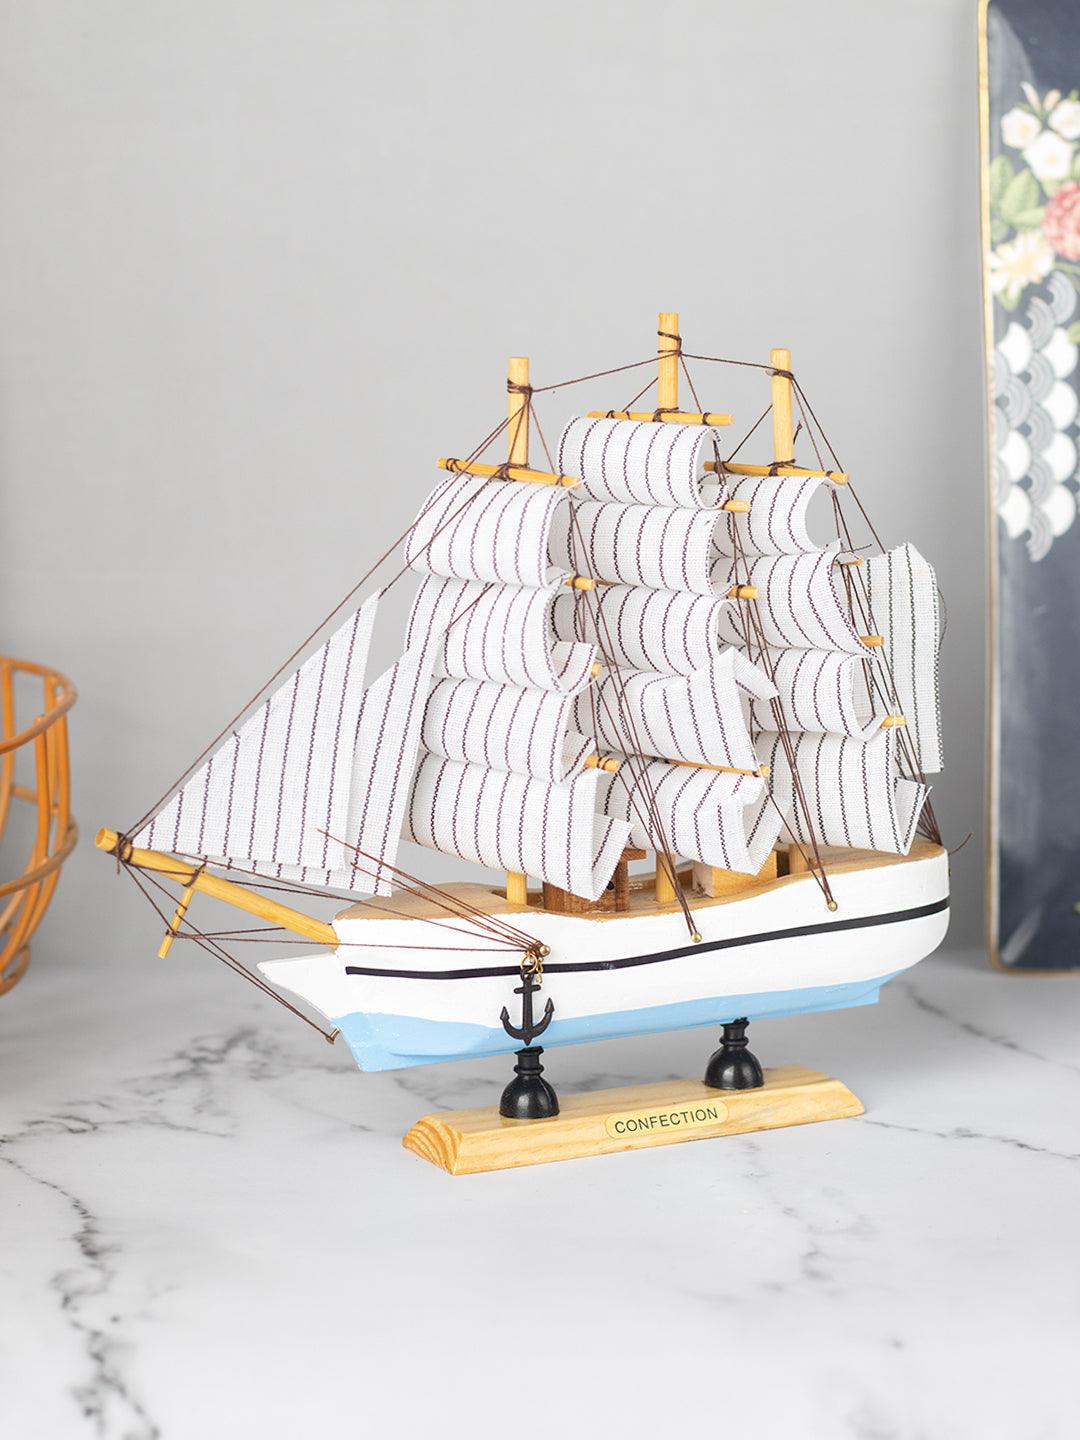 Sailing Boat Decorative Showpiece - White - MARKET 99